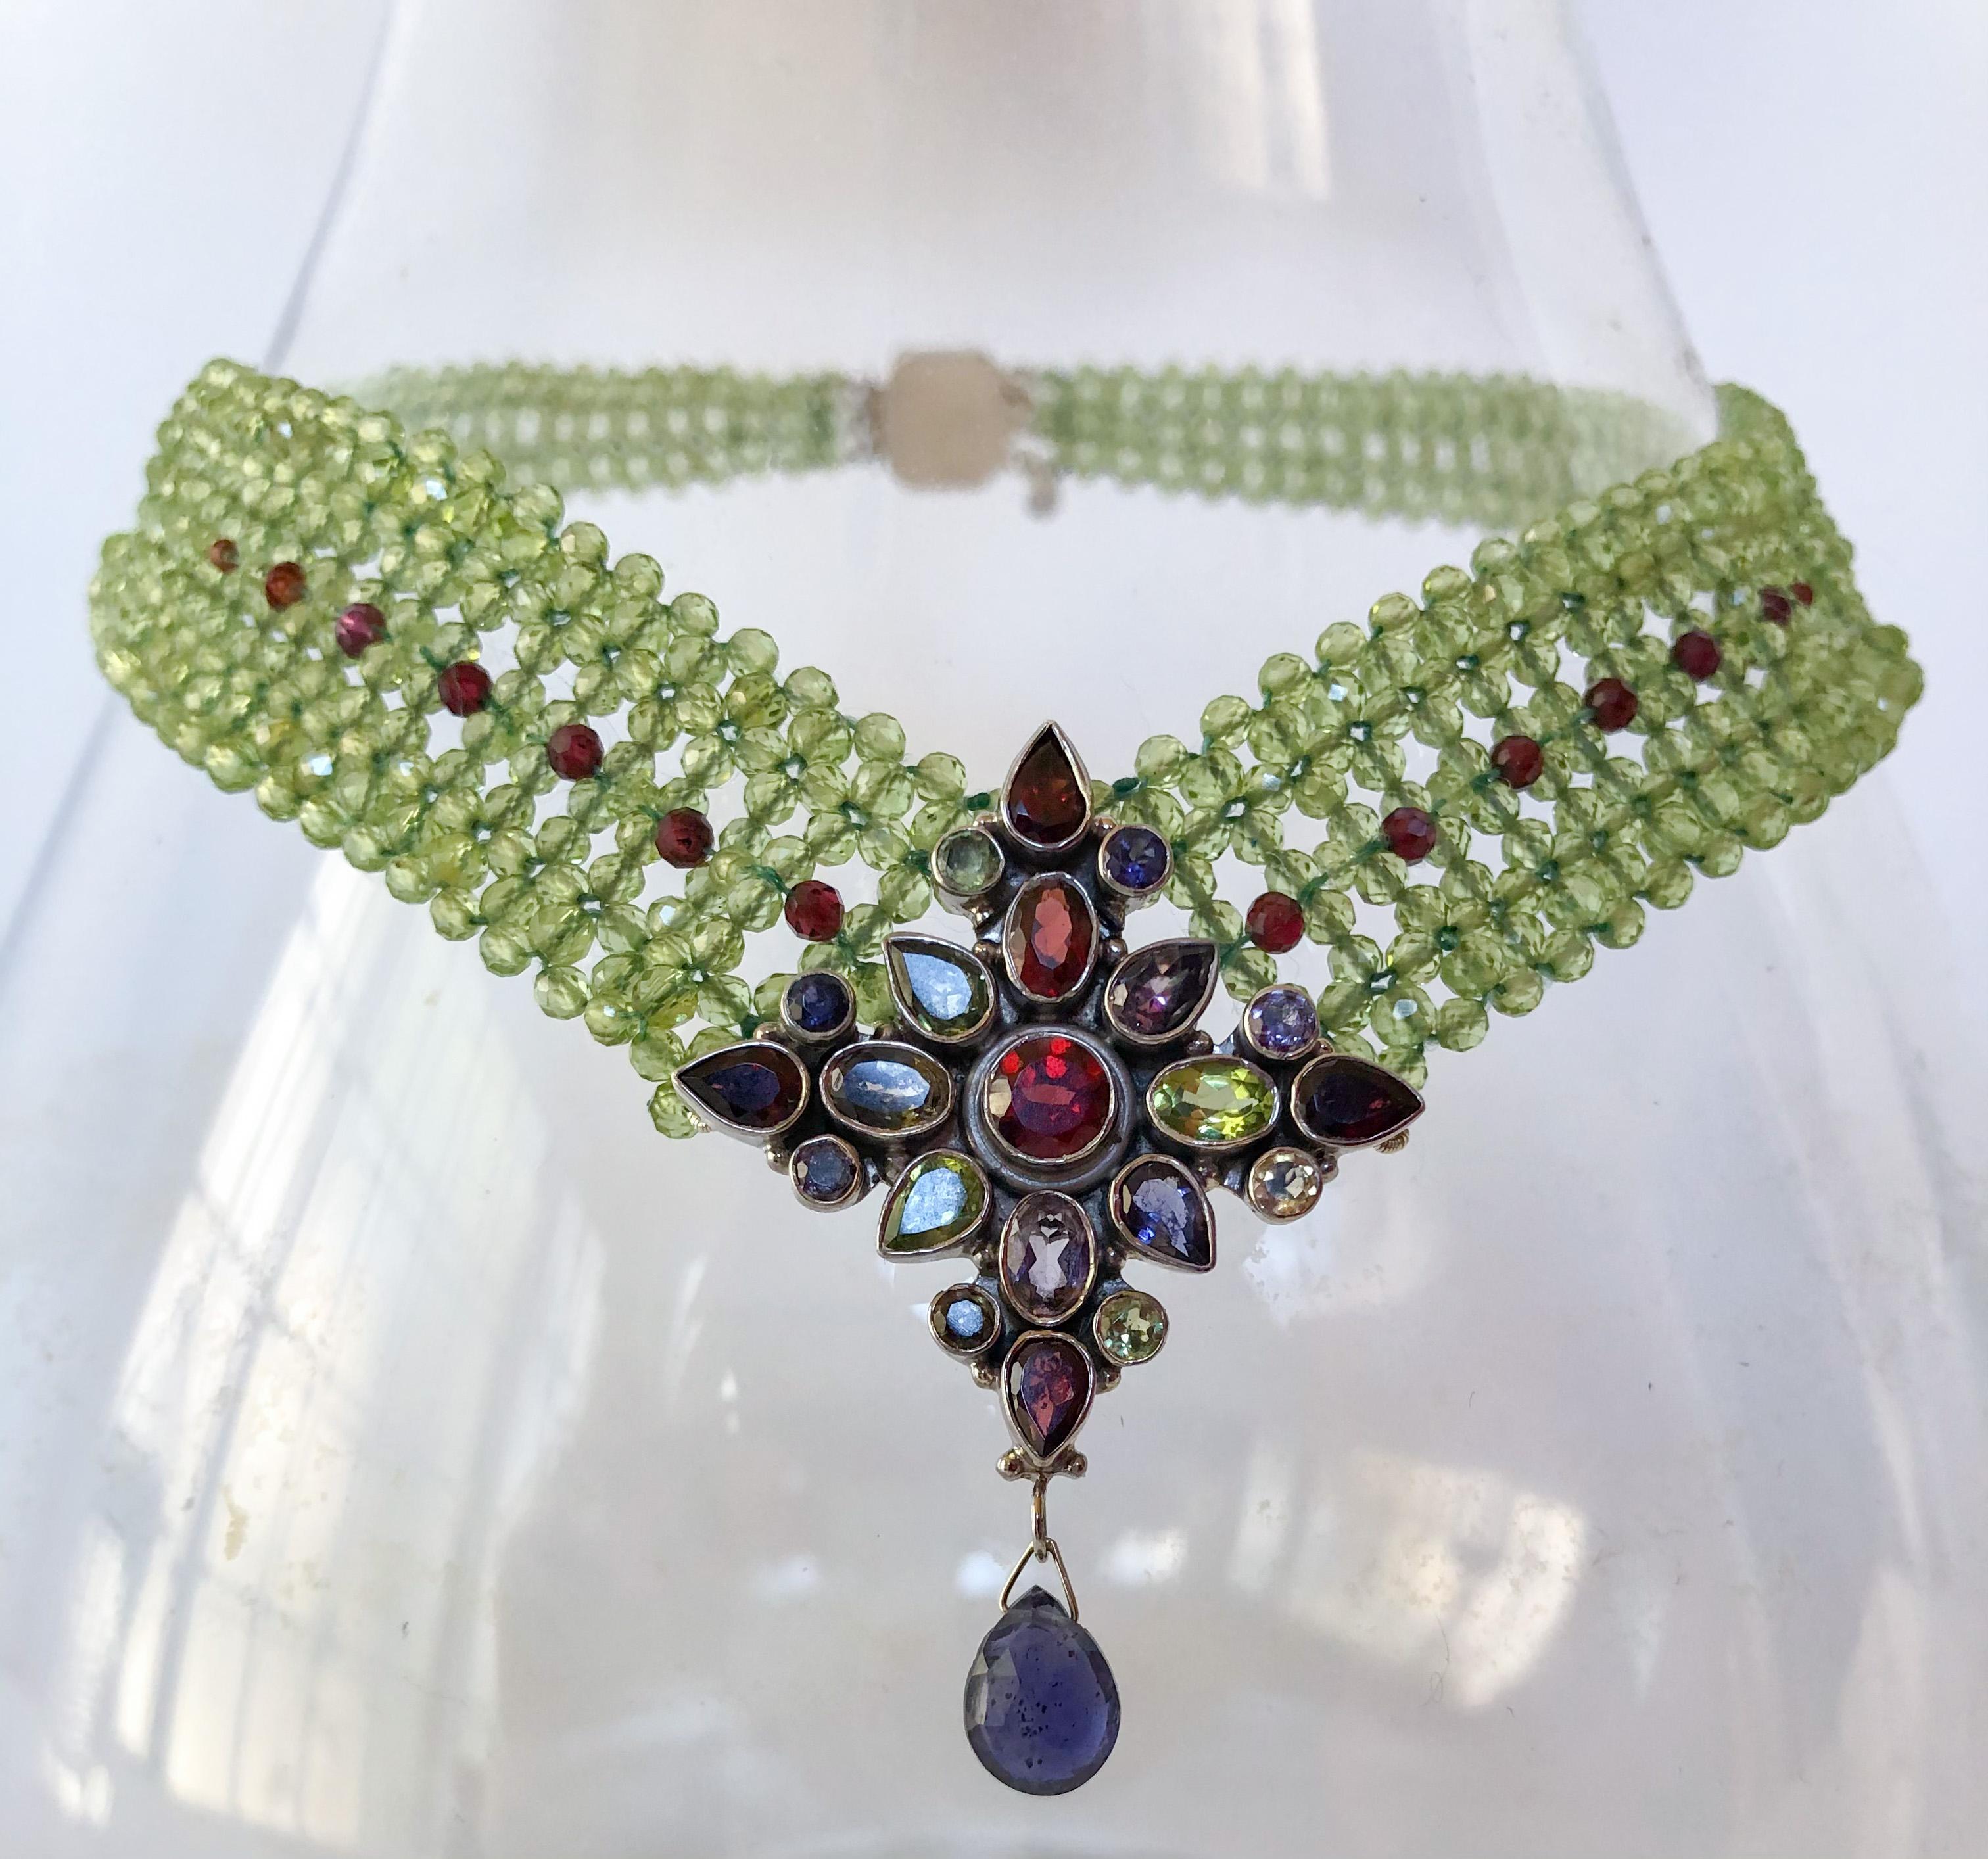 Artisan Marina J. Stunning Woven Peridot and Garnet Necklace & Multicolored Centerpiece